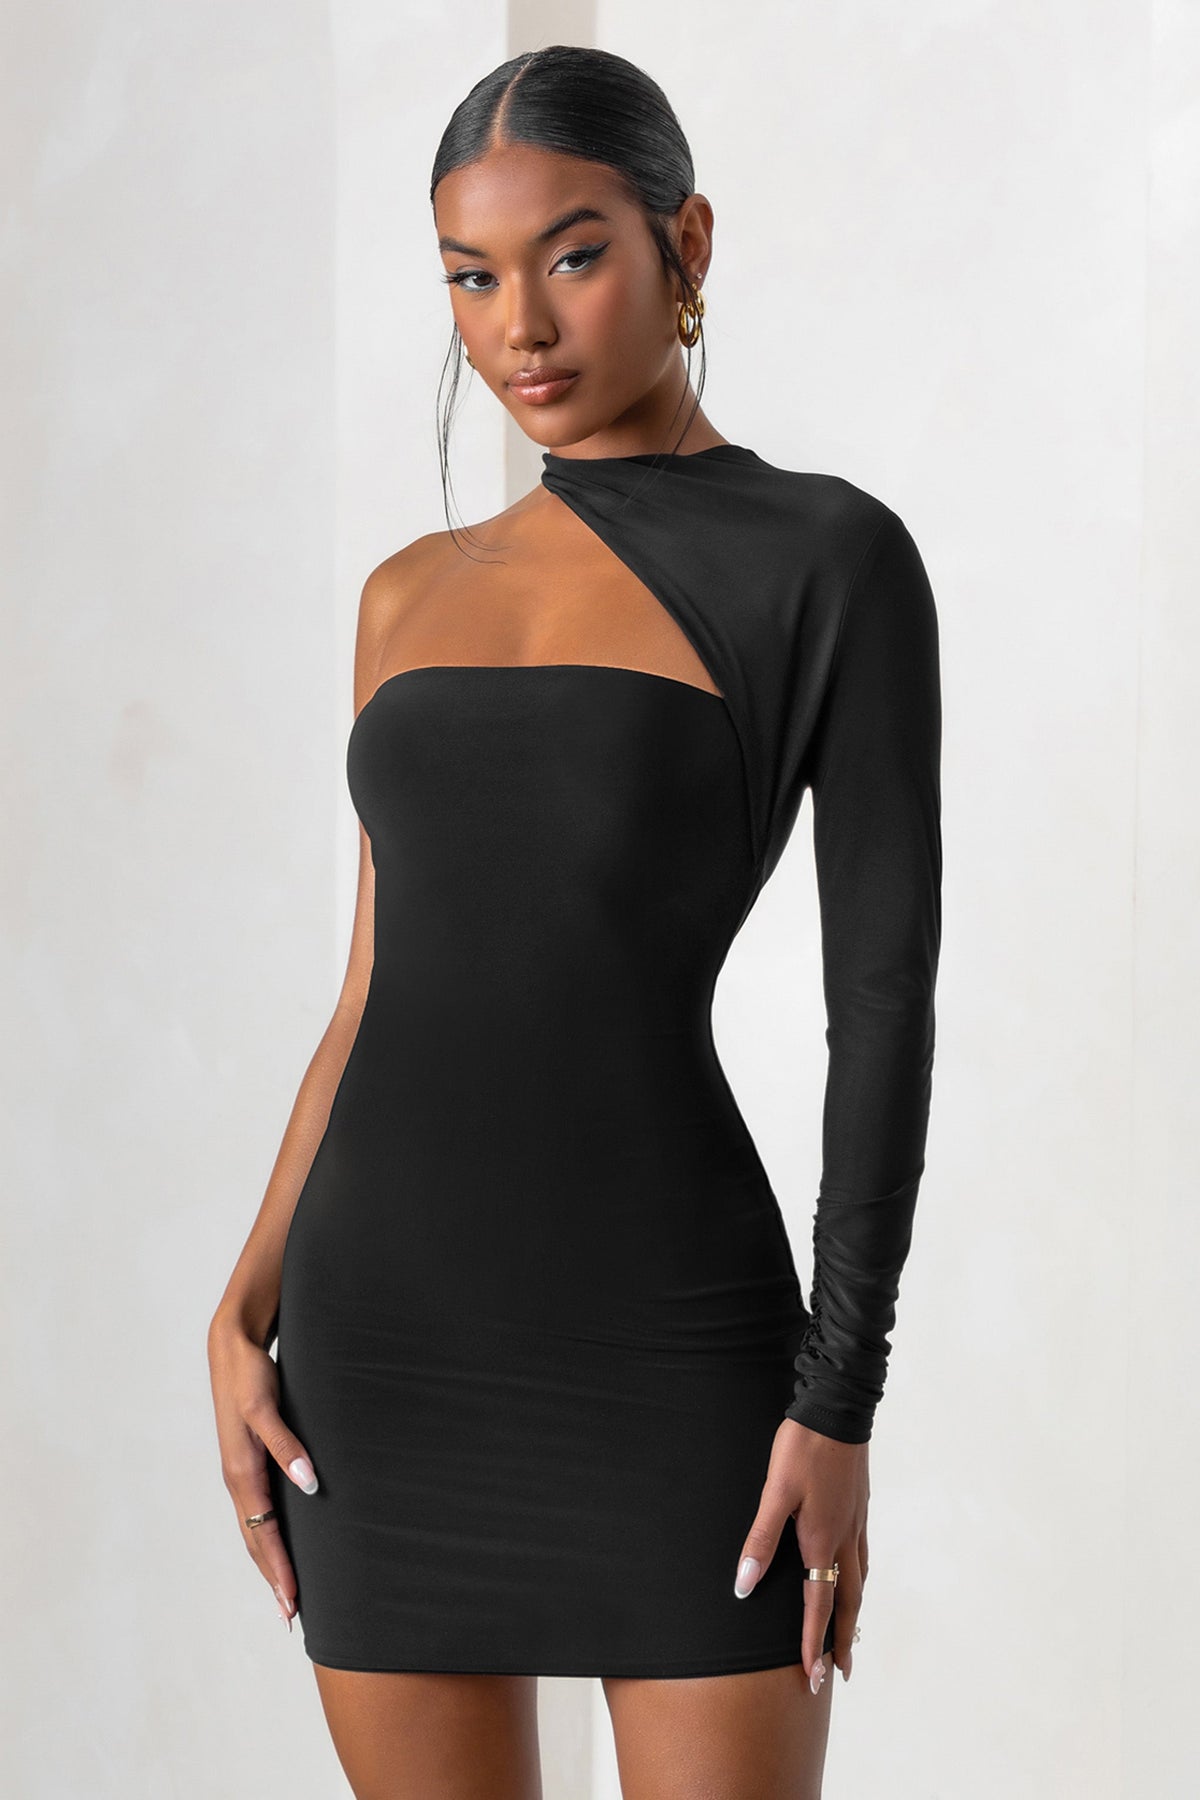 tight dresses - Google Search  Tight dresses, Shoulder maxi dress, Bodycon  dress parties